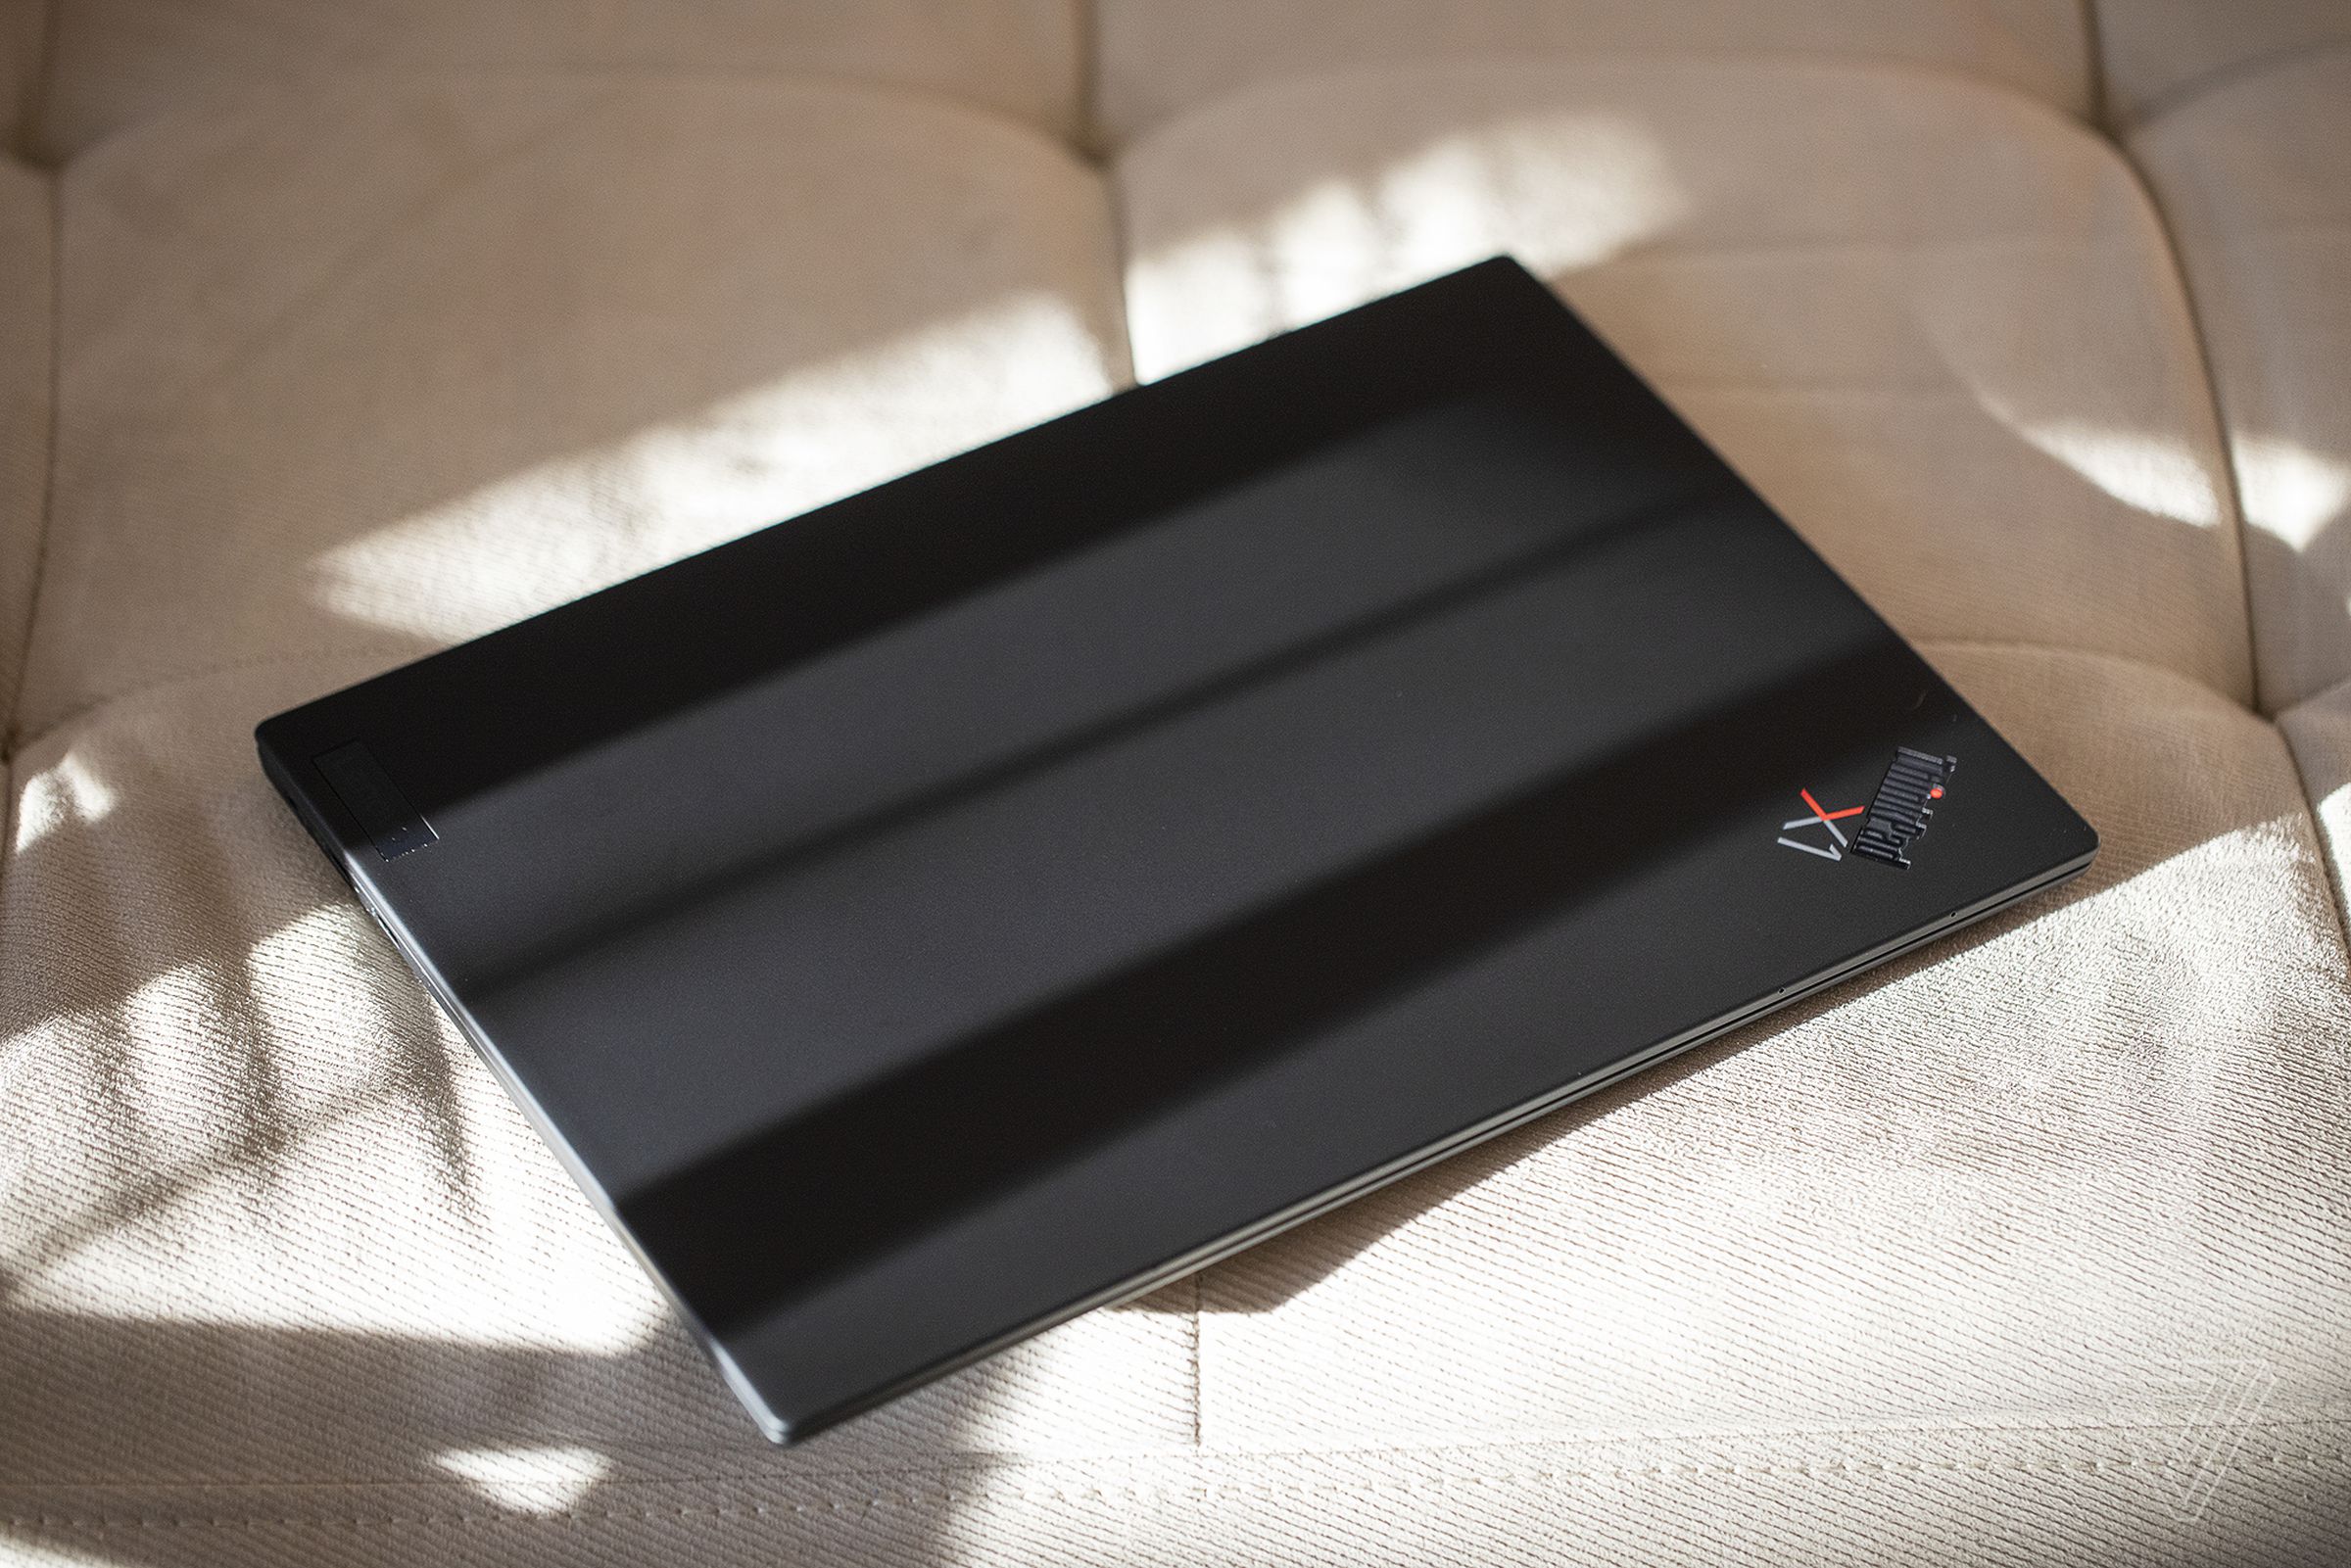 The ThinkPad X1 Nano closed, seen from above.